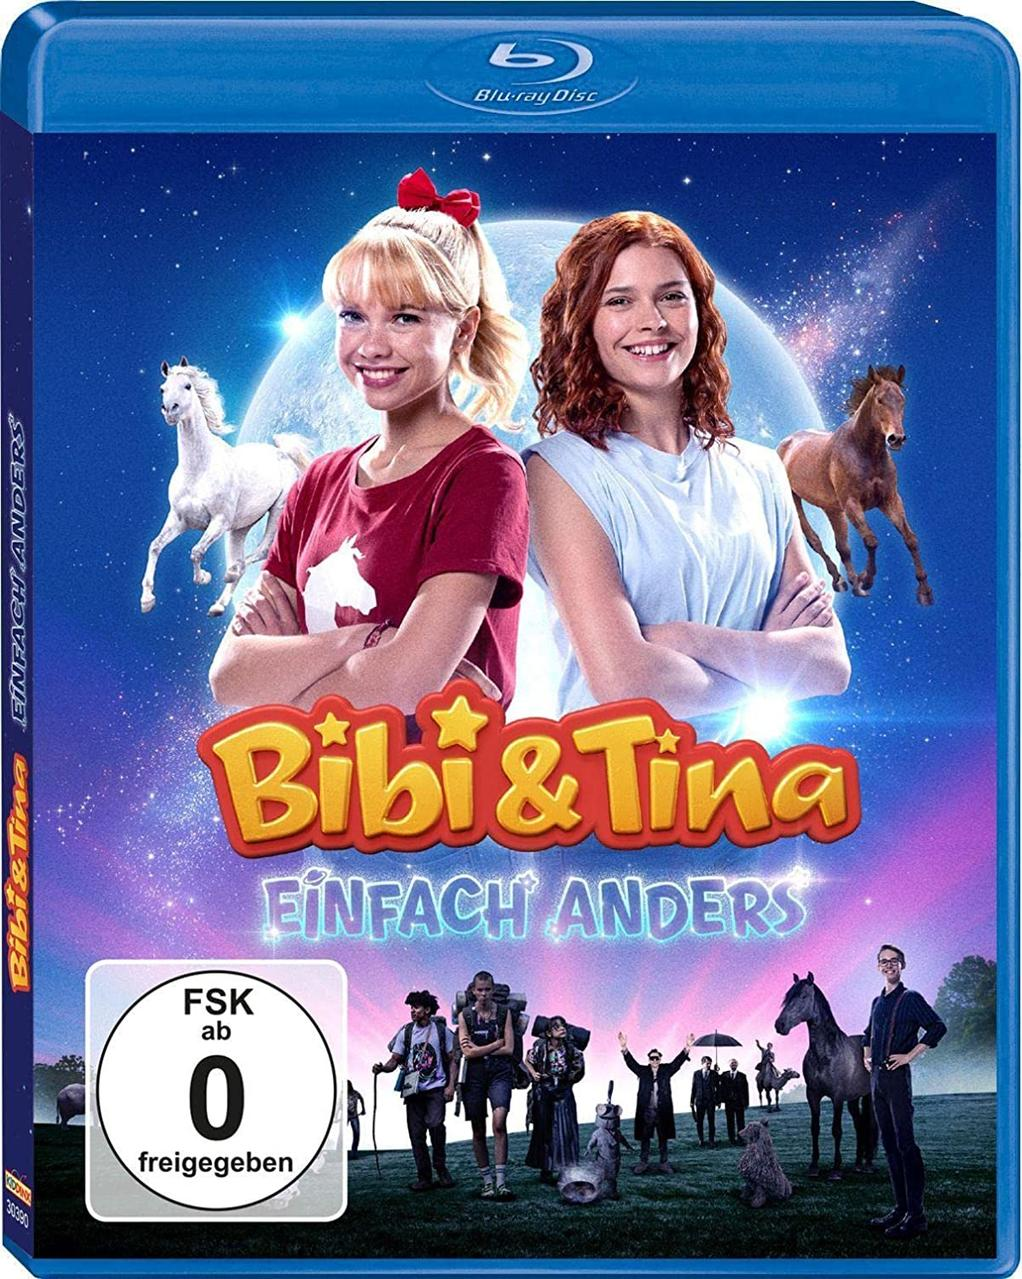 Bibi & Tina anders - Einfach 5.Kinofilm Blu-ray -